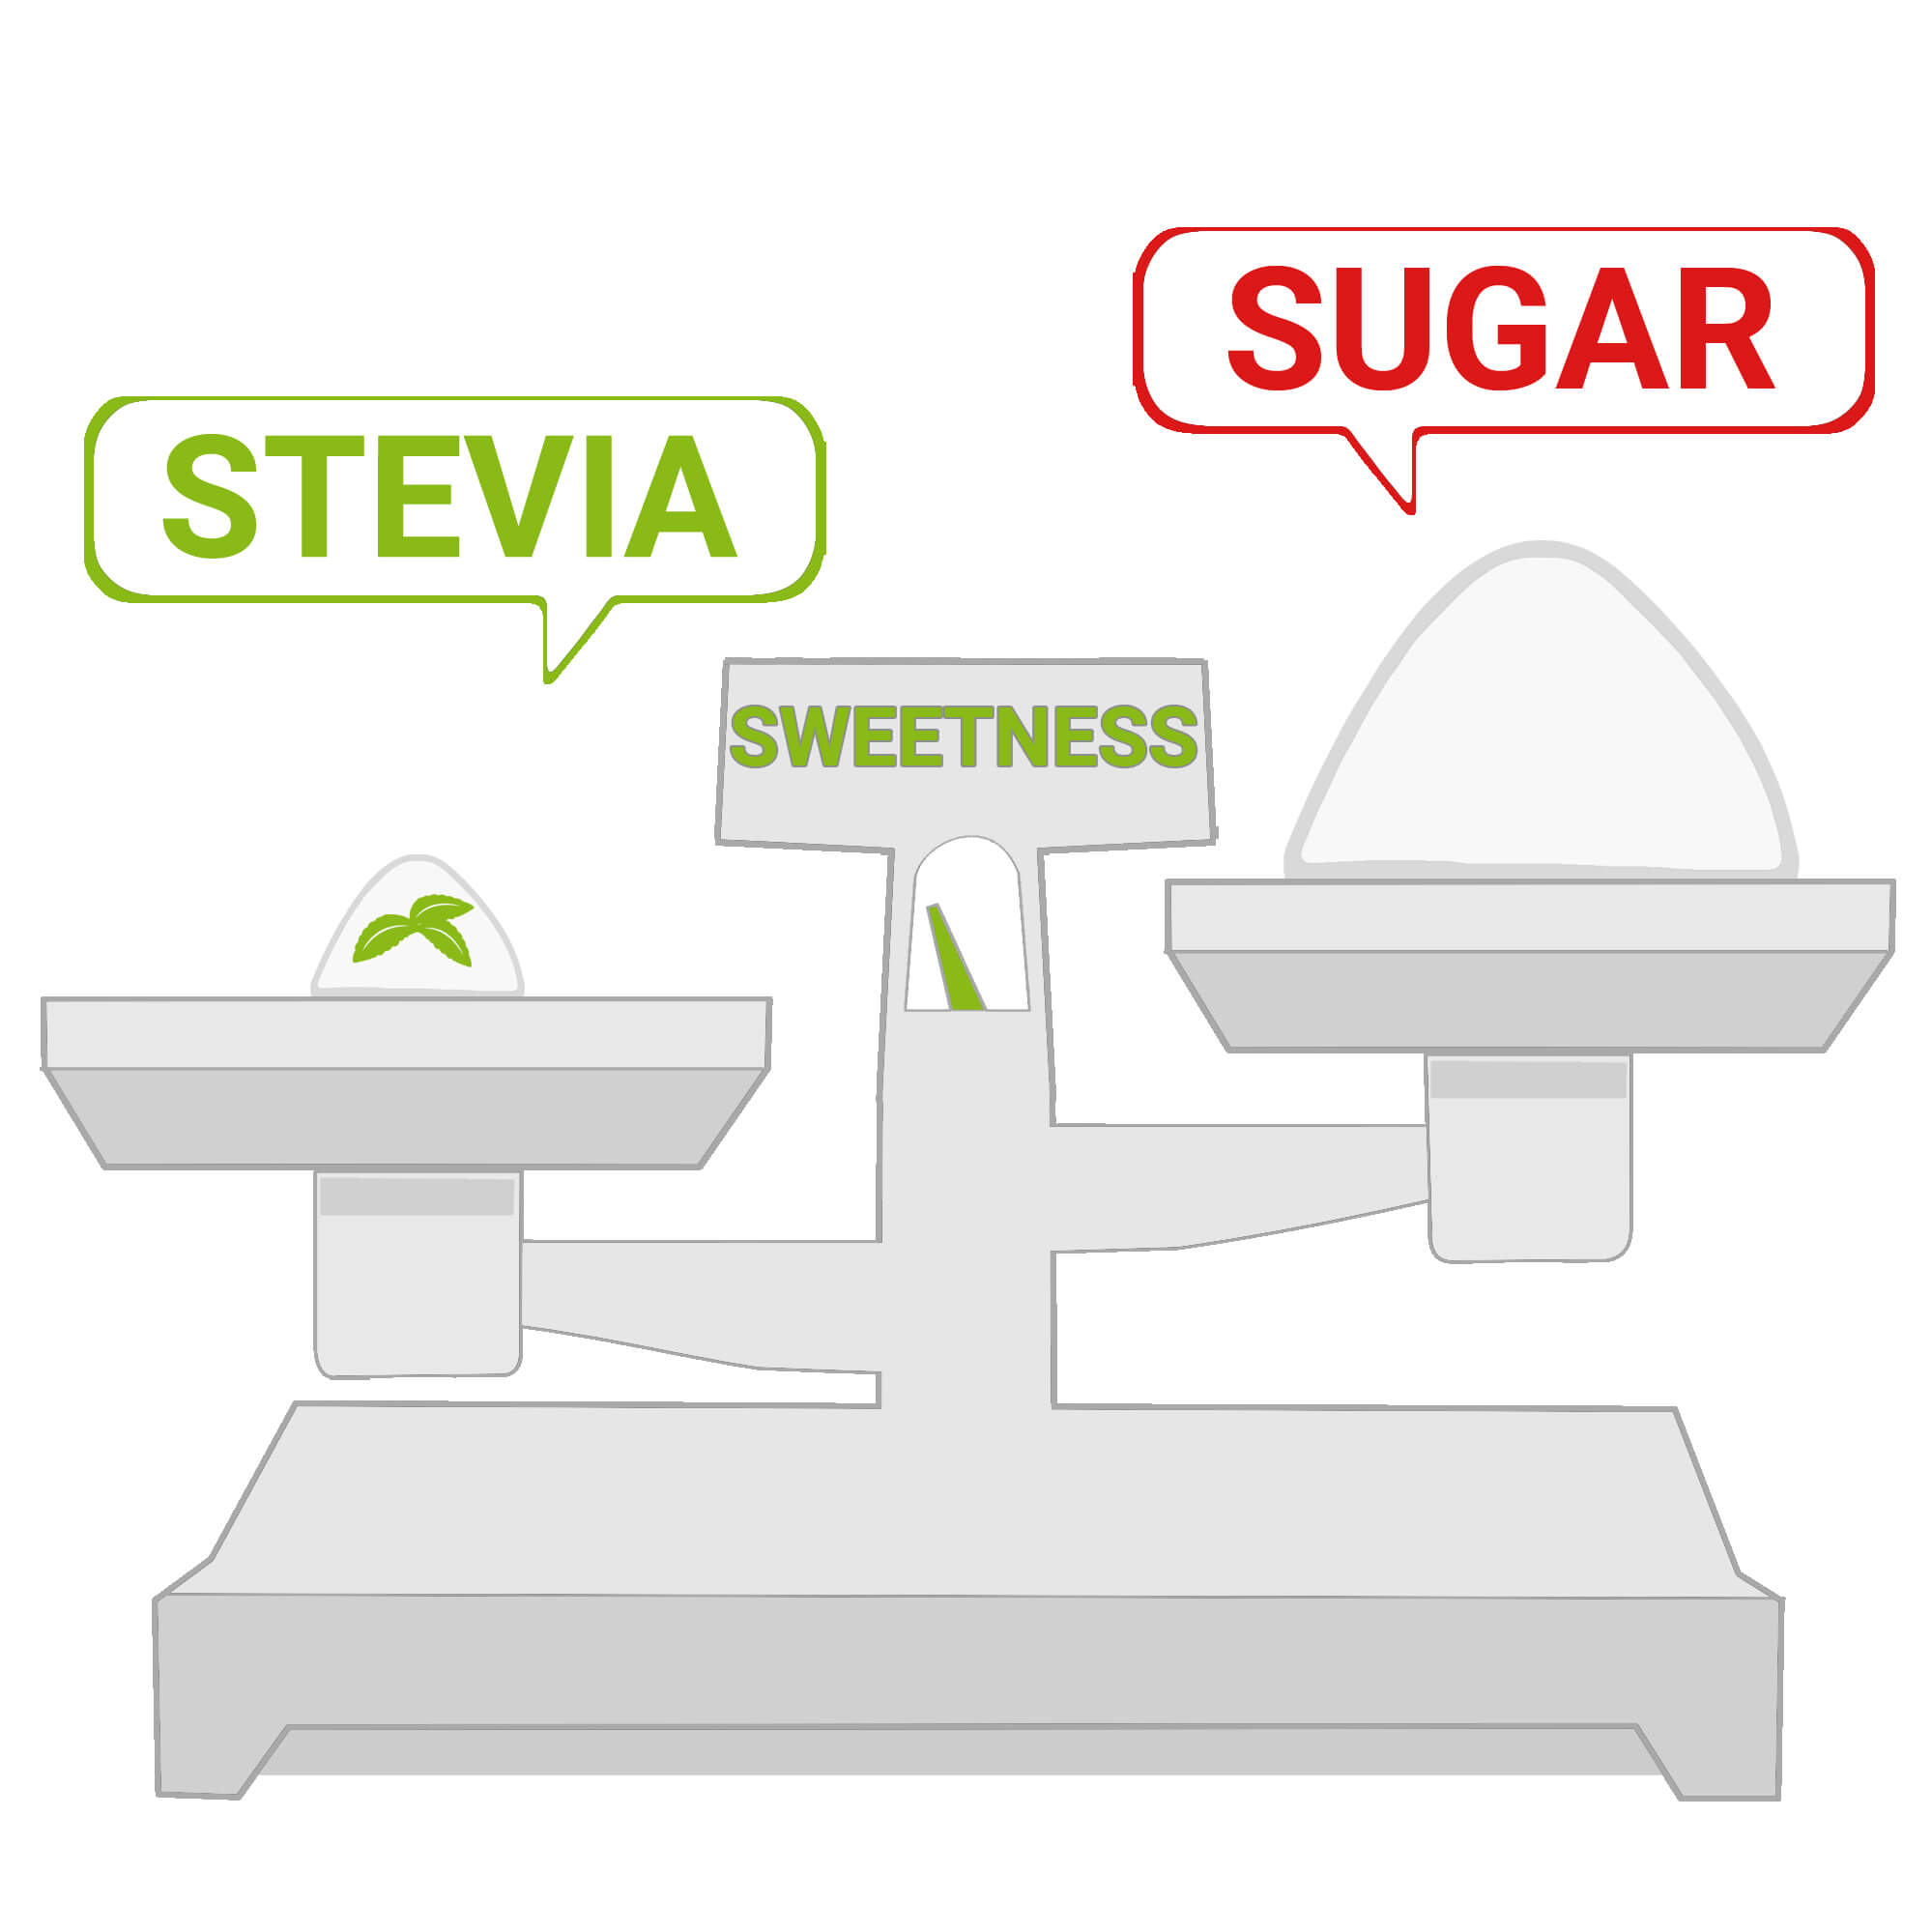 The correct dosing of Stevia